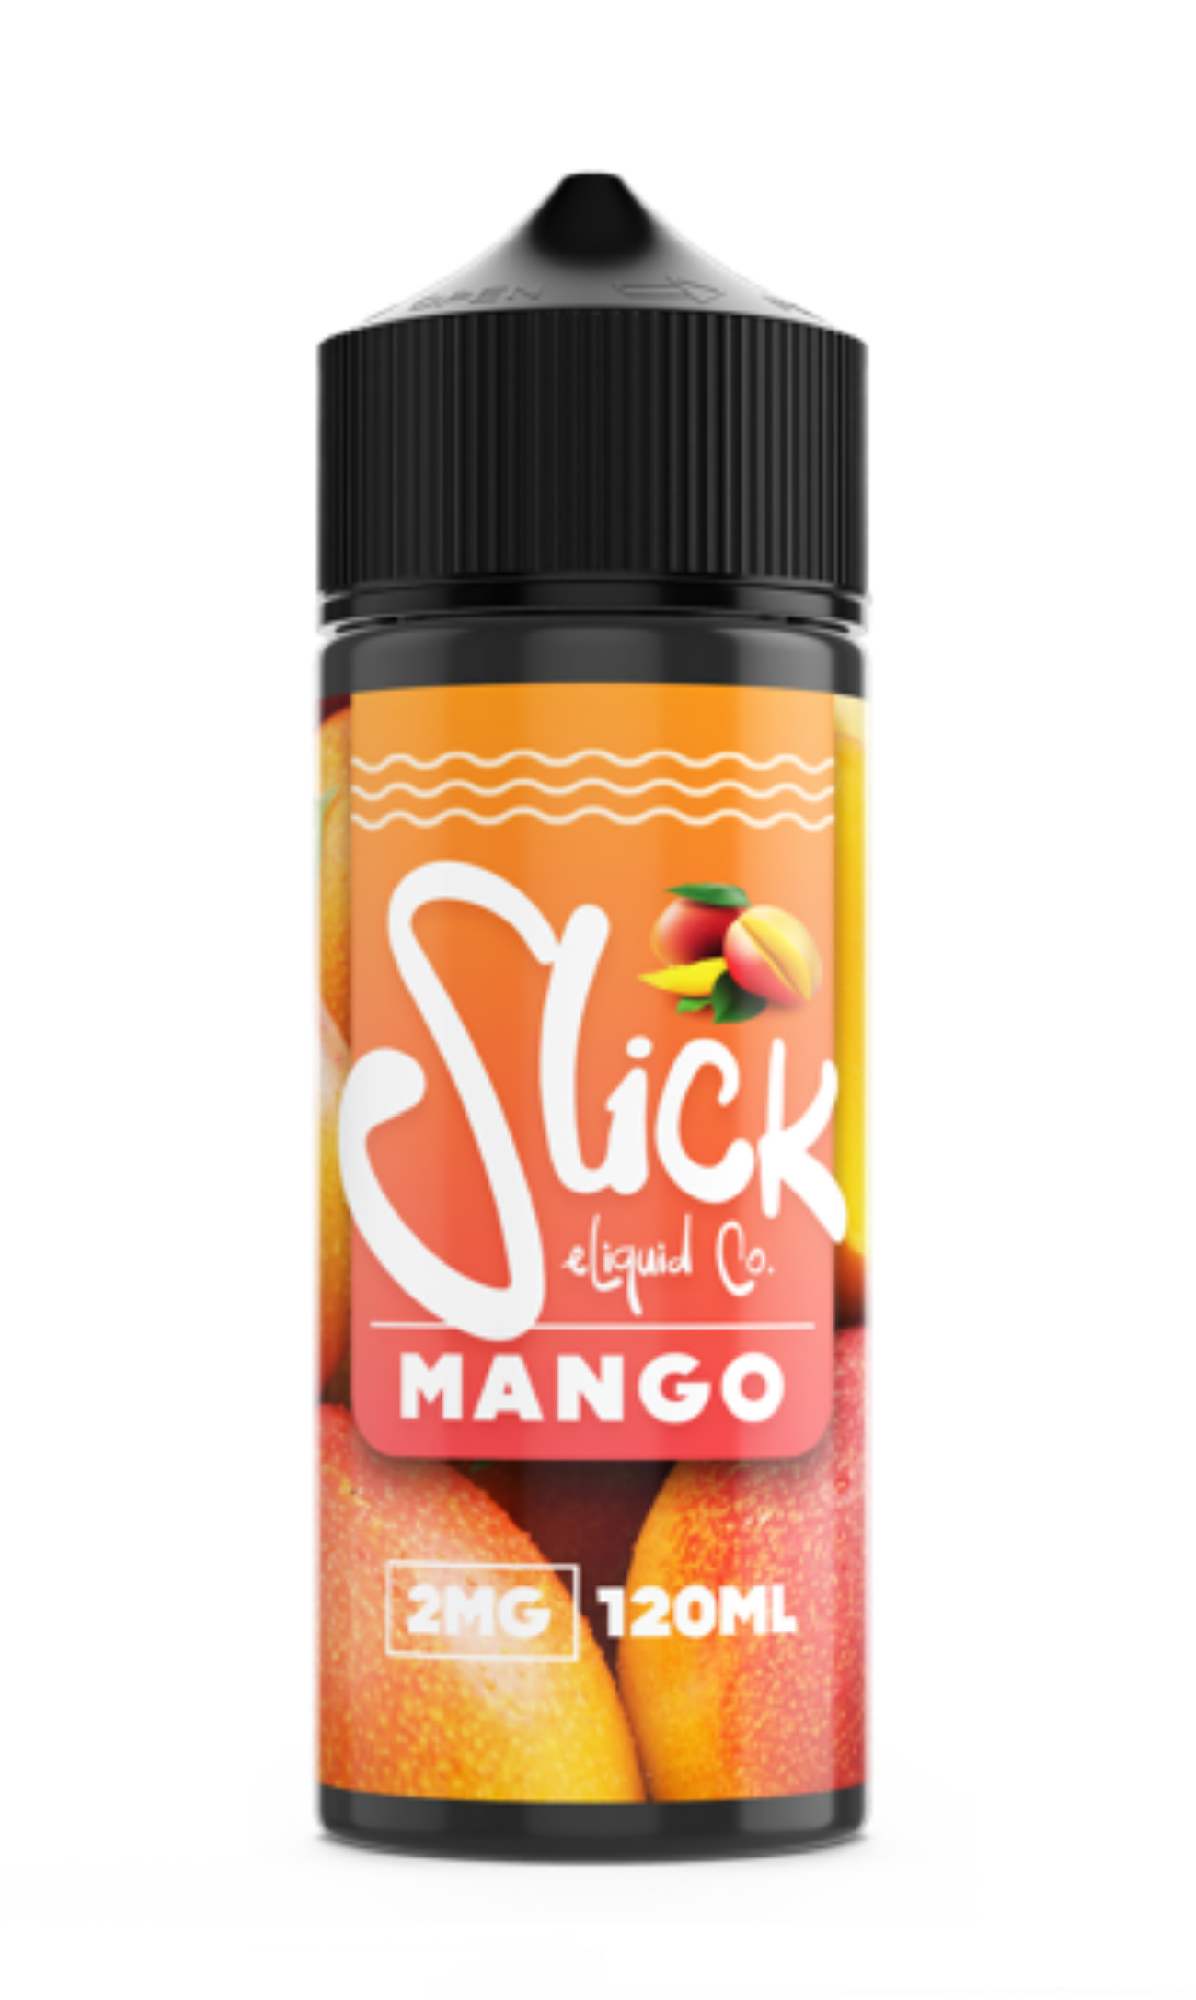 Mango by Slick E-Liquid 120ml